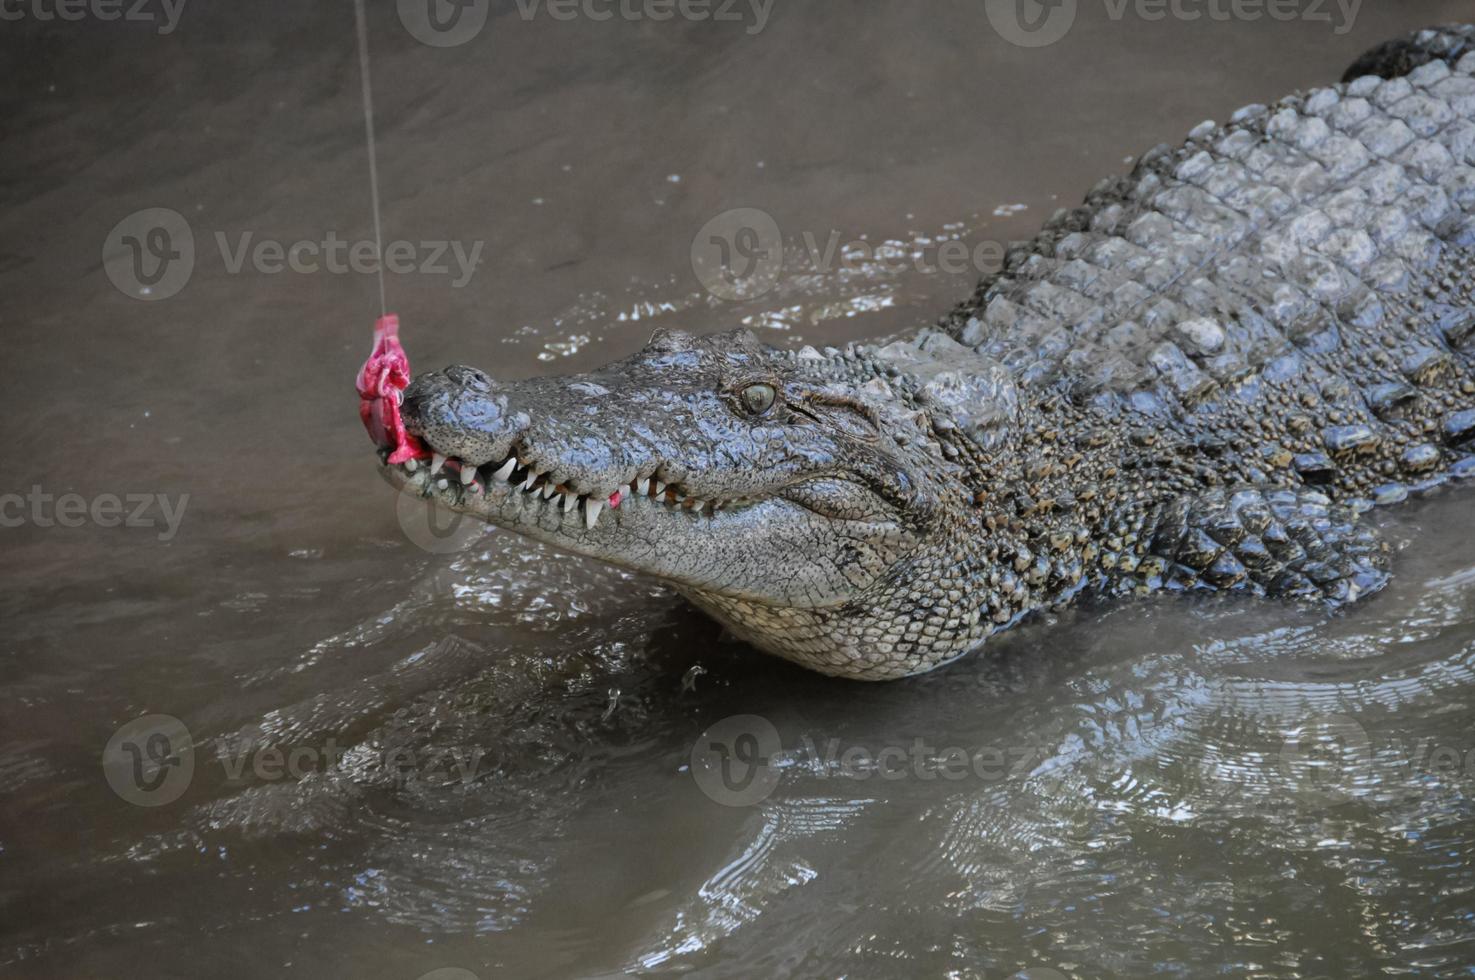 Crocodile eating close-up photo